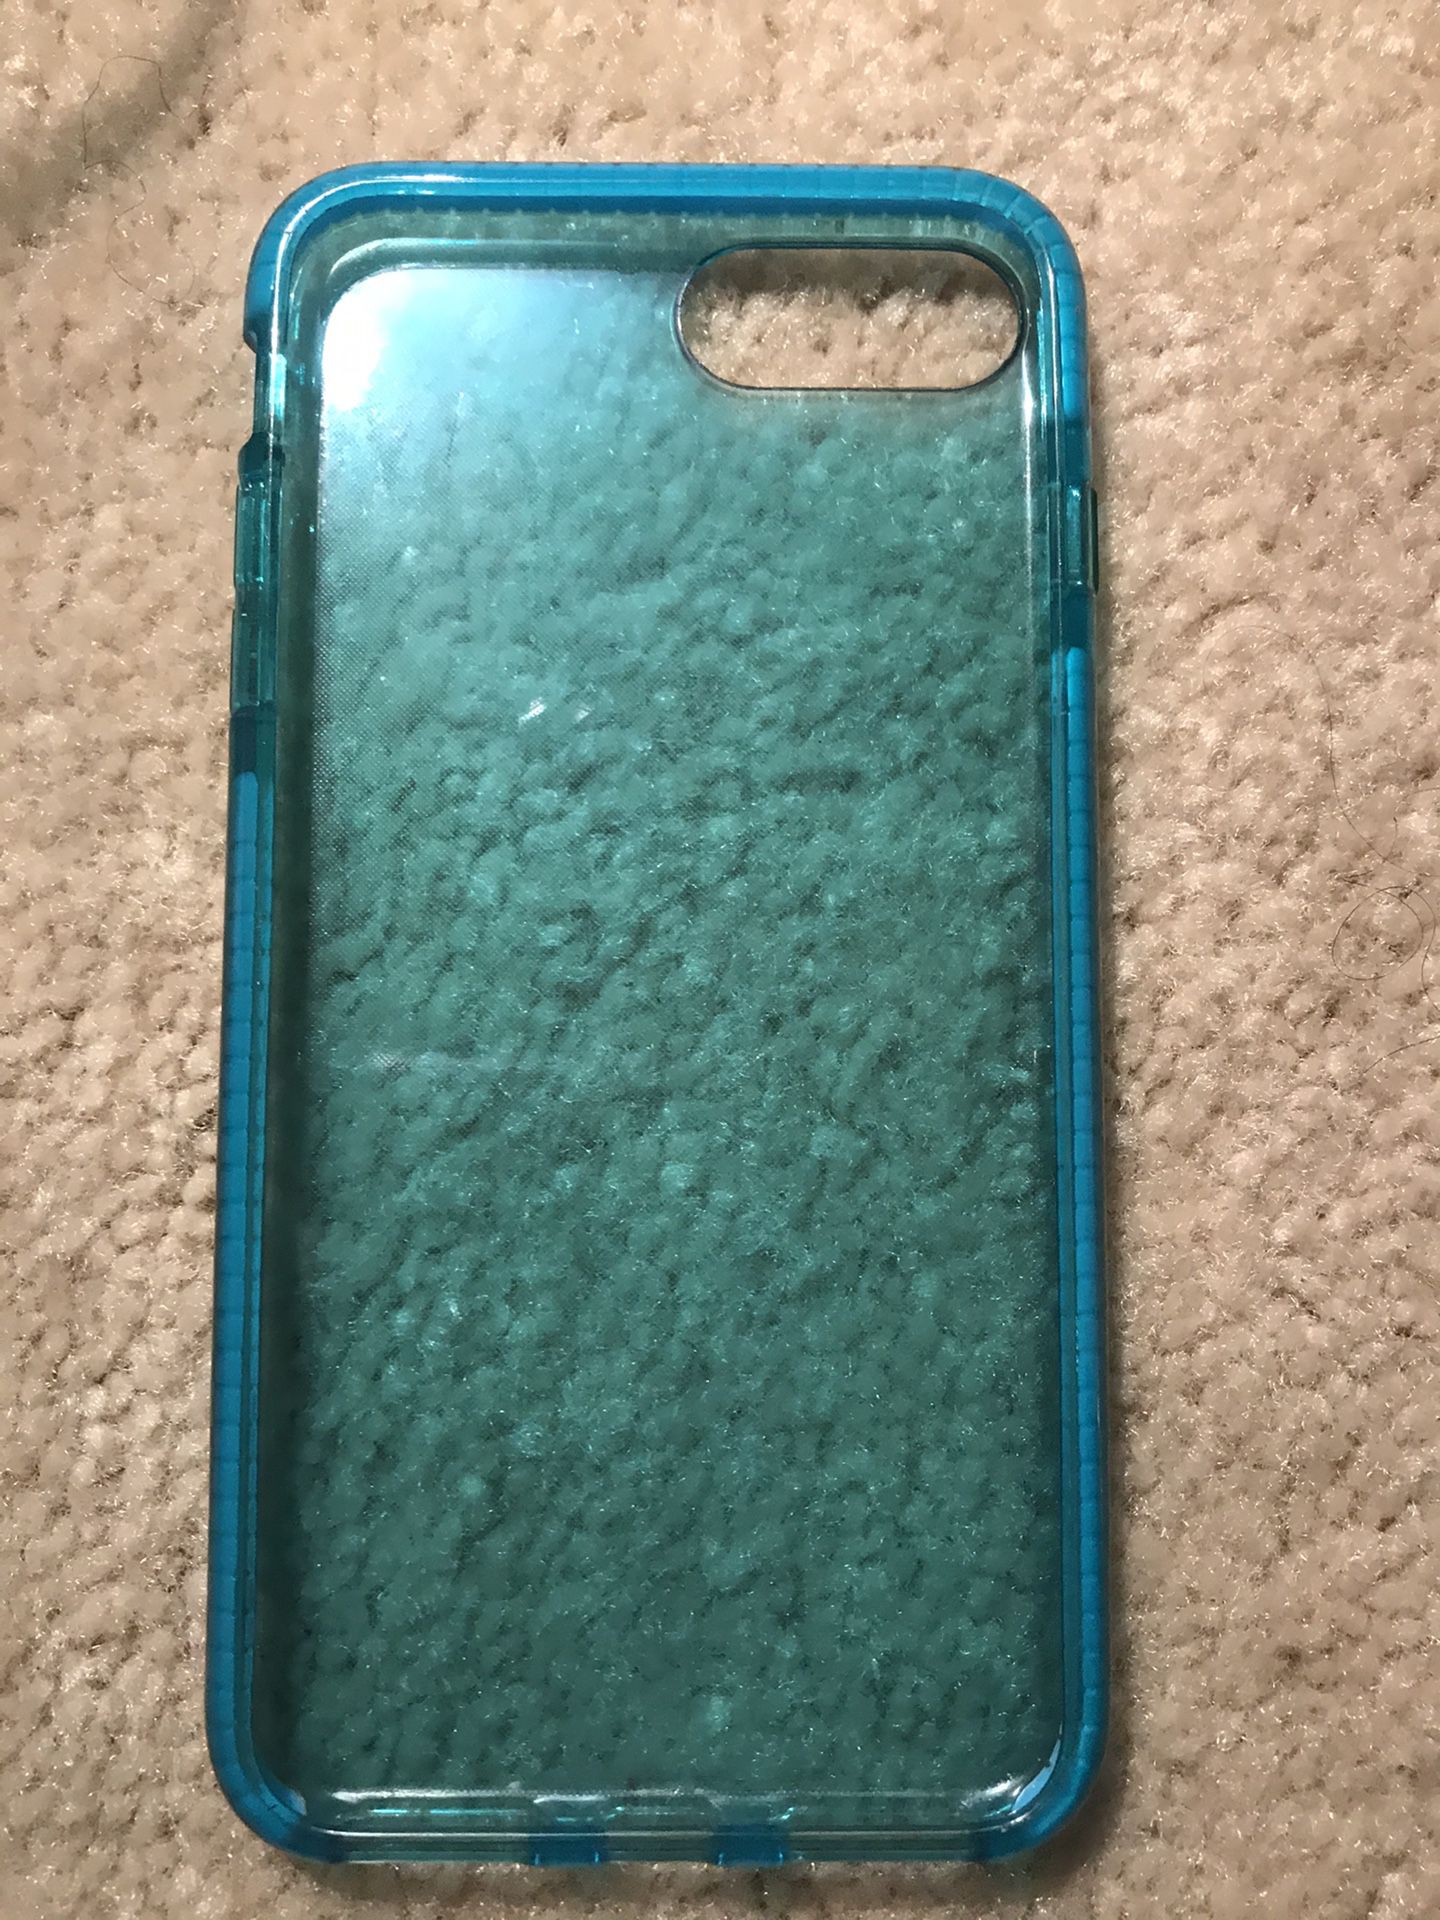 iPhone 7/8 plus clear blue phone case